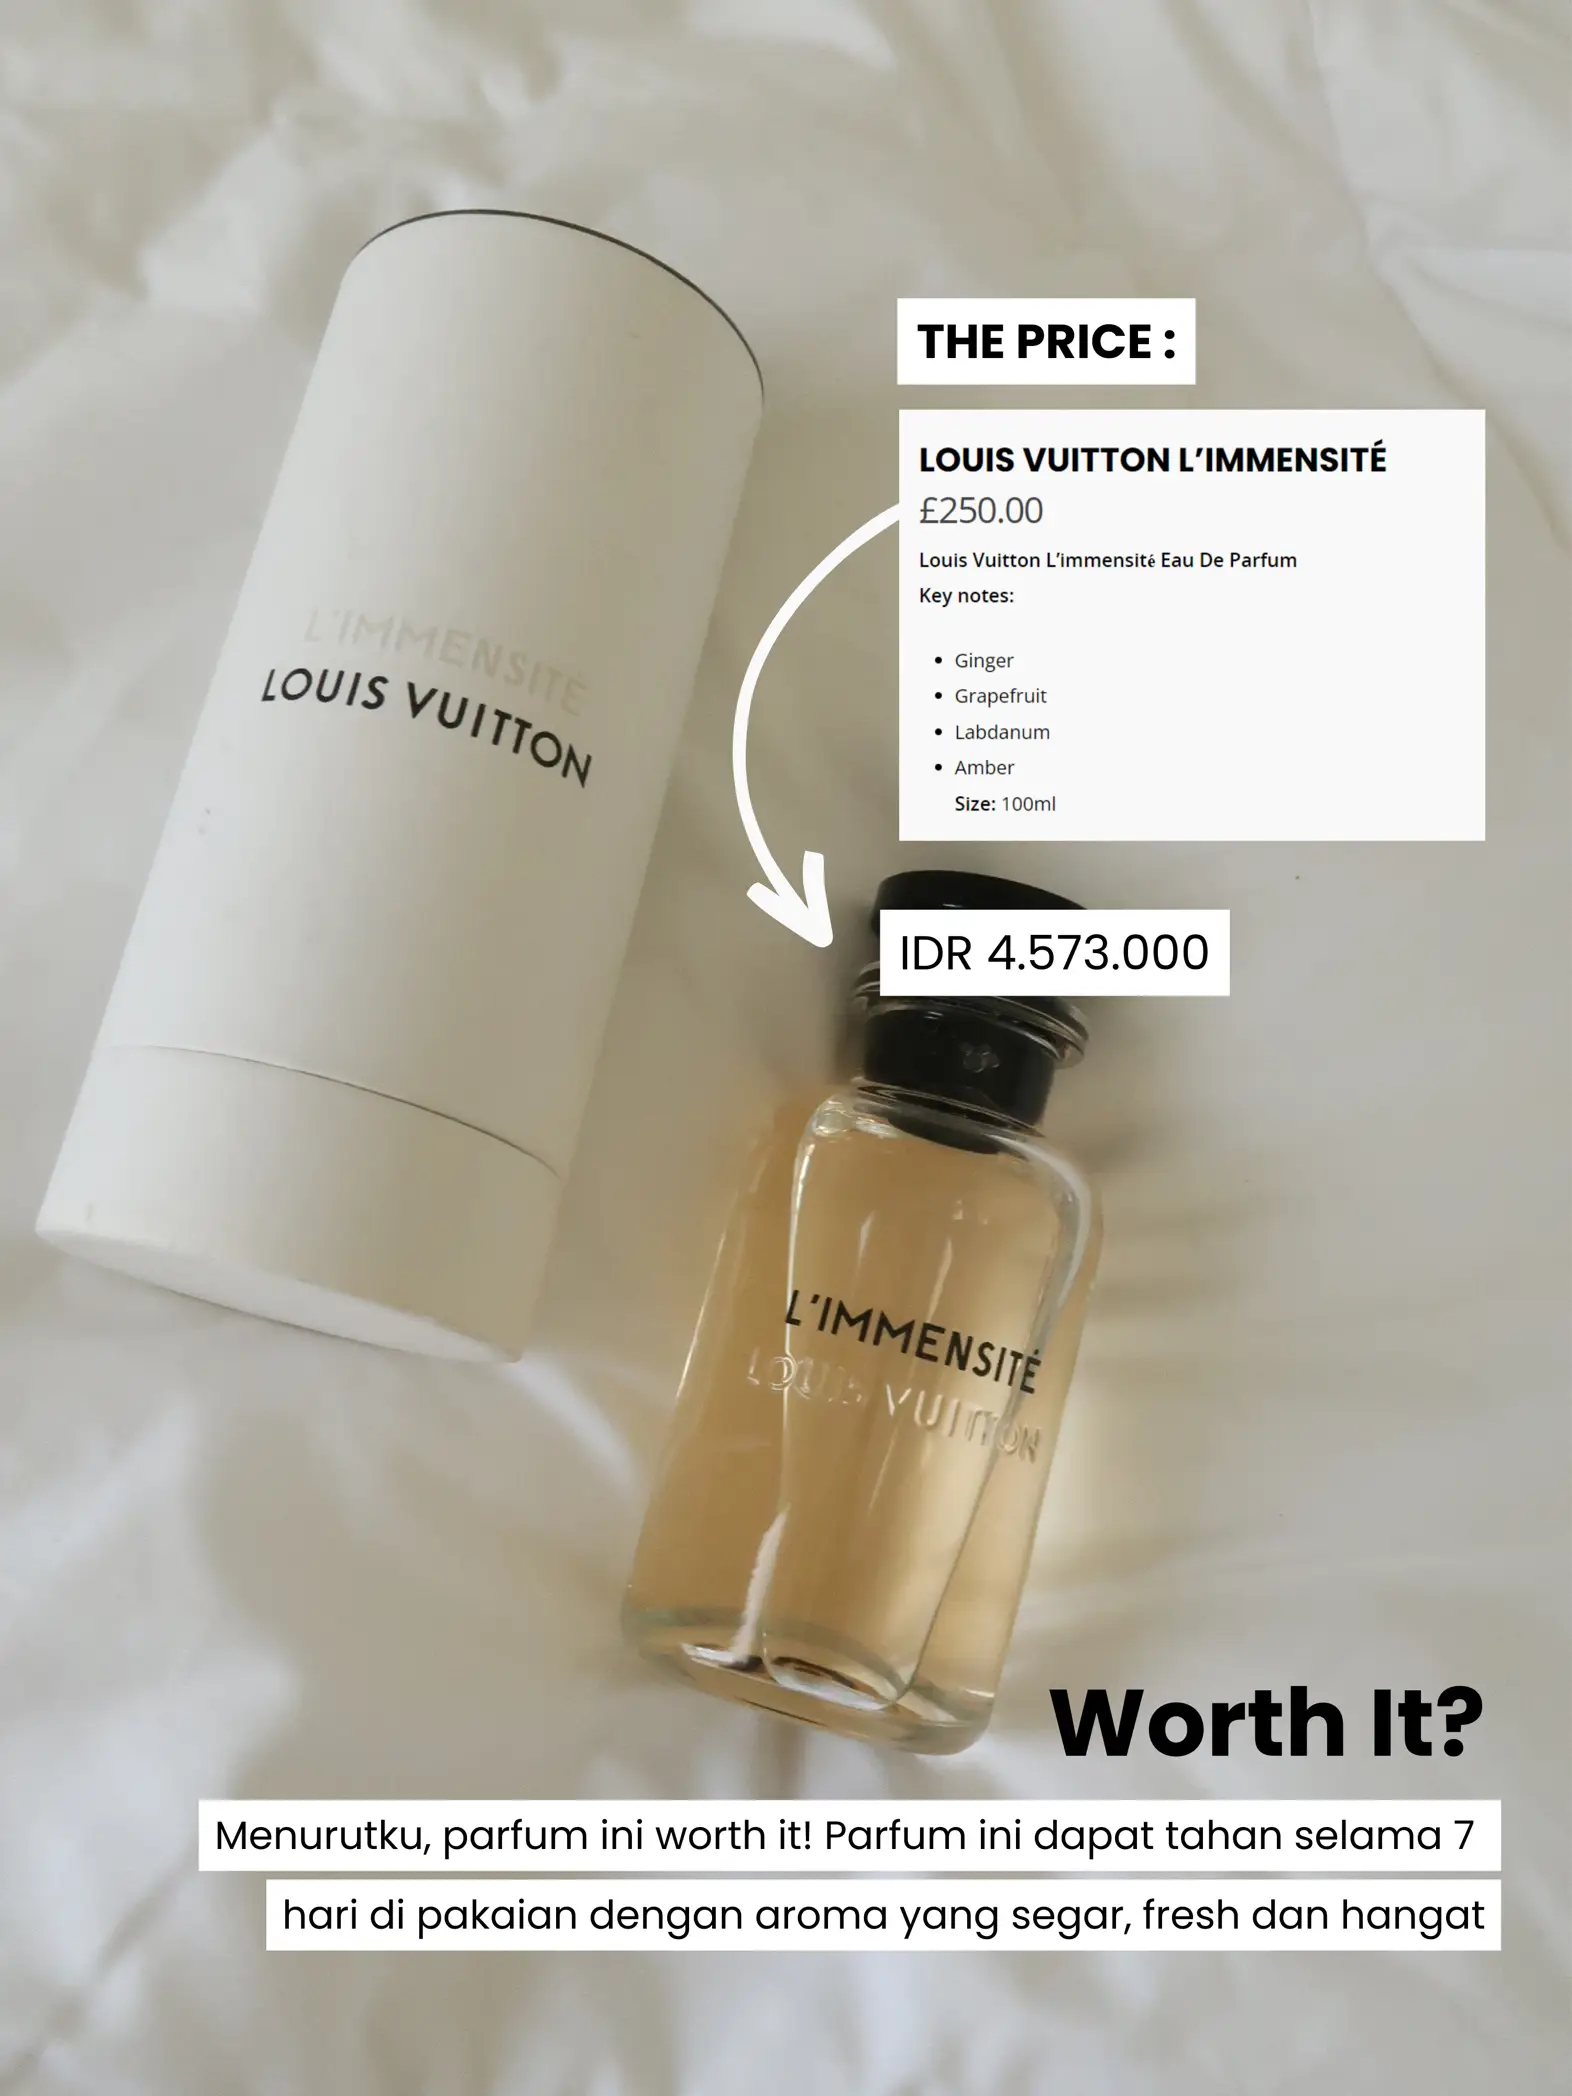 L'Immensite by LV review #louisvuitton#louisvuittonreview#luxuryfragra, Louis Vuitton Perfume review